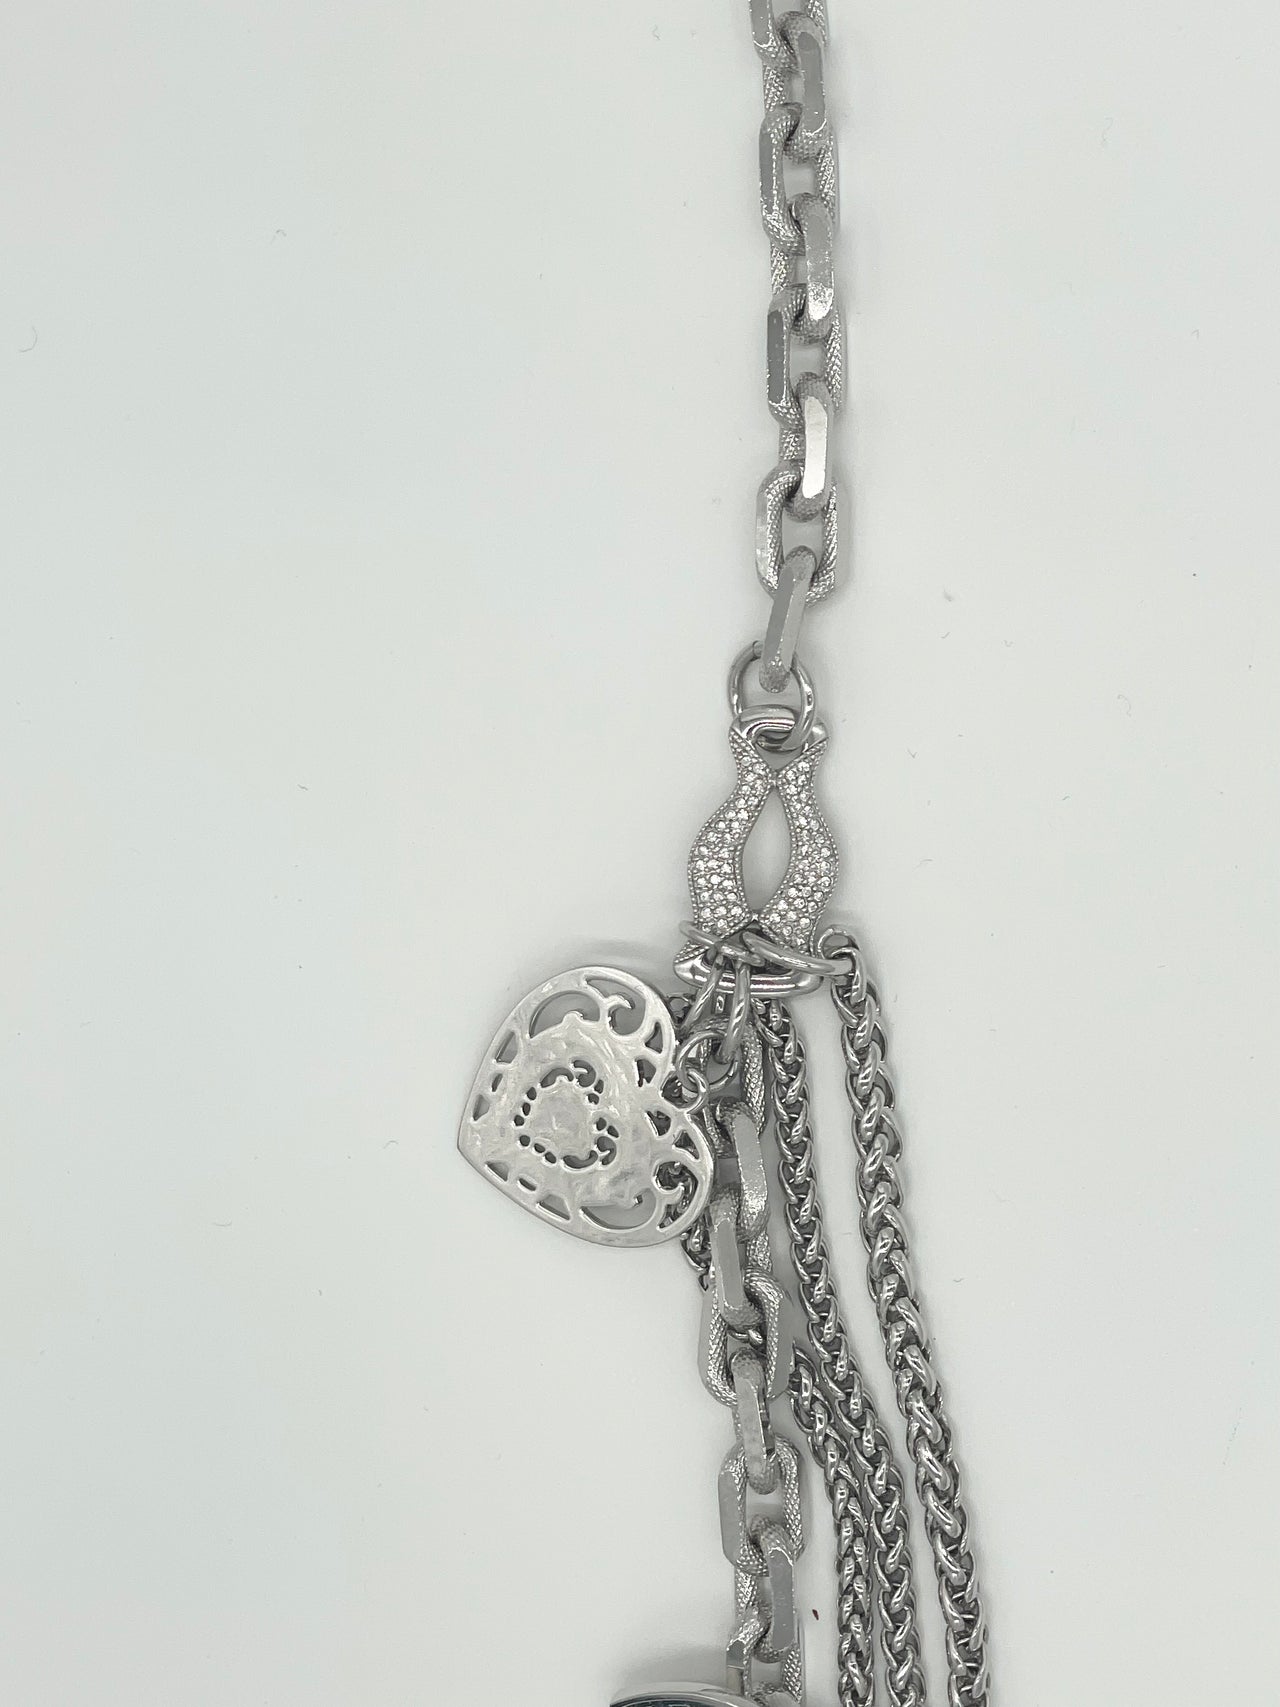 Dior Necklace Multi Strand Heart Charm